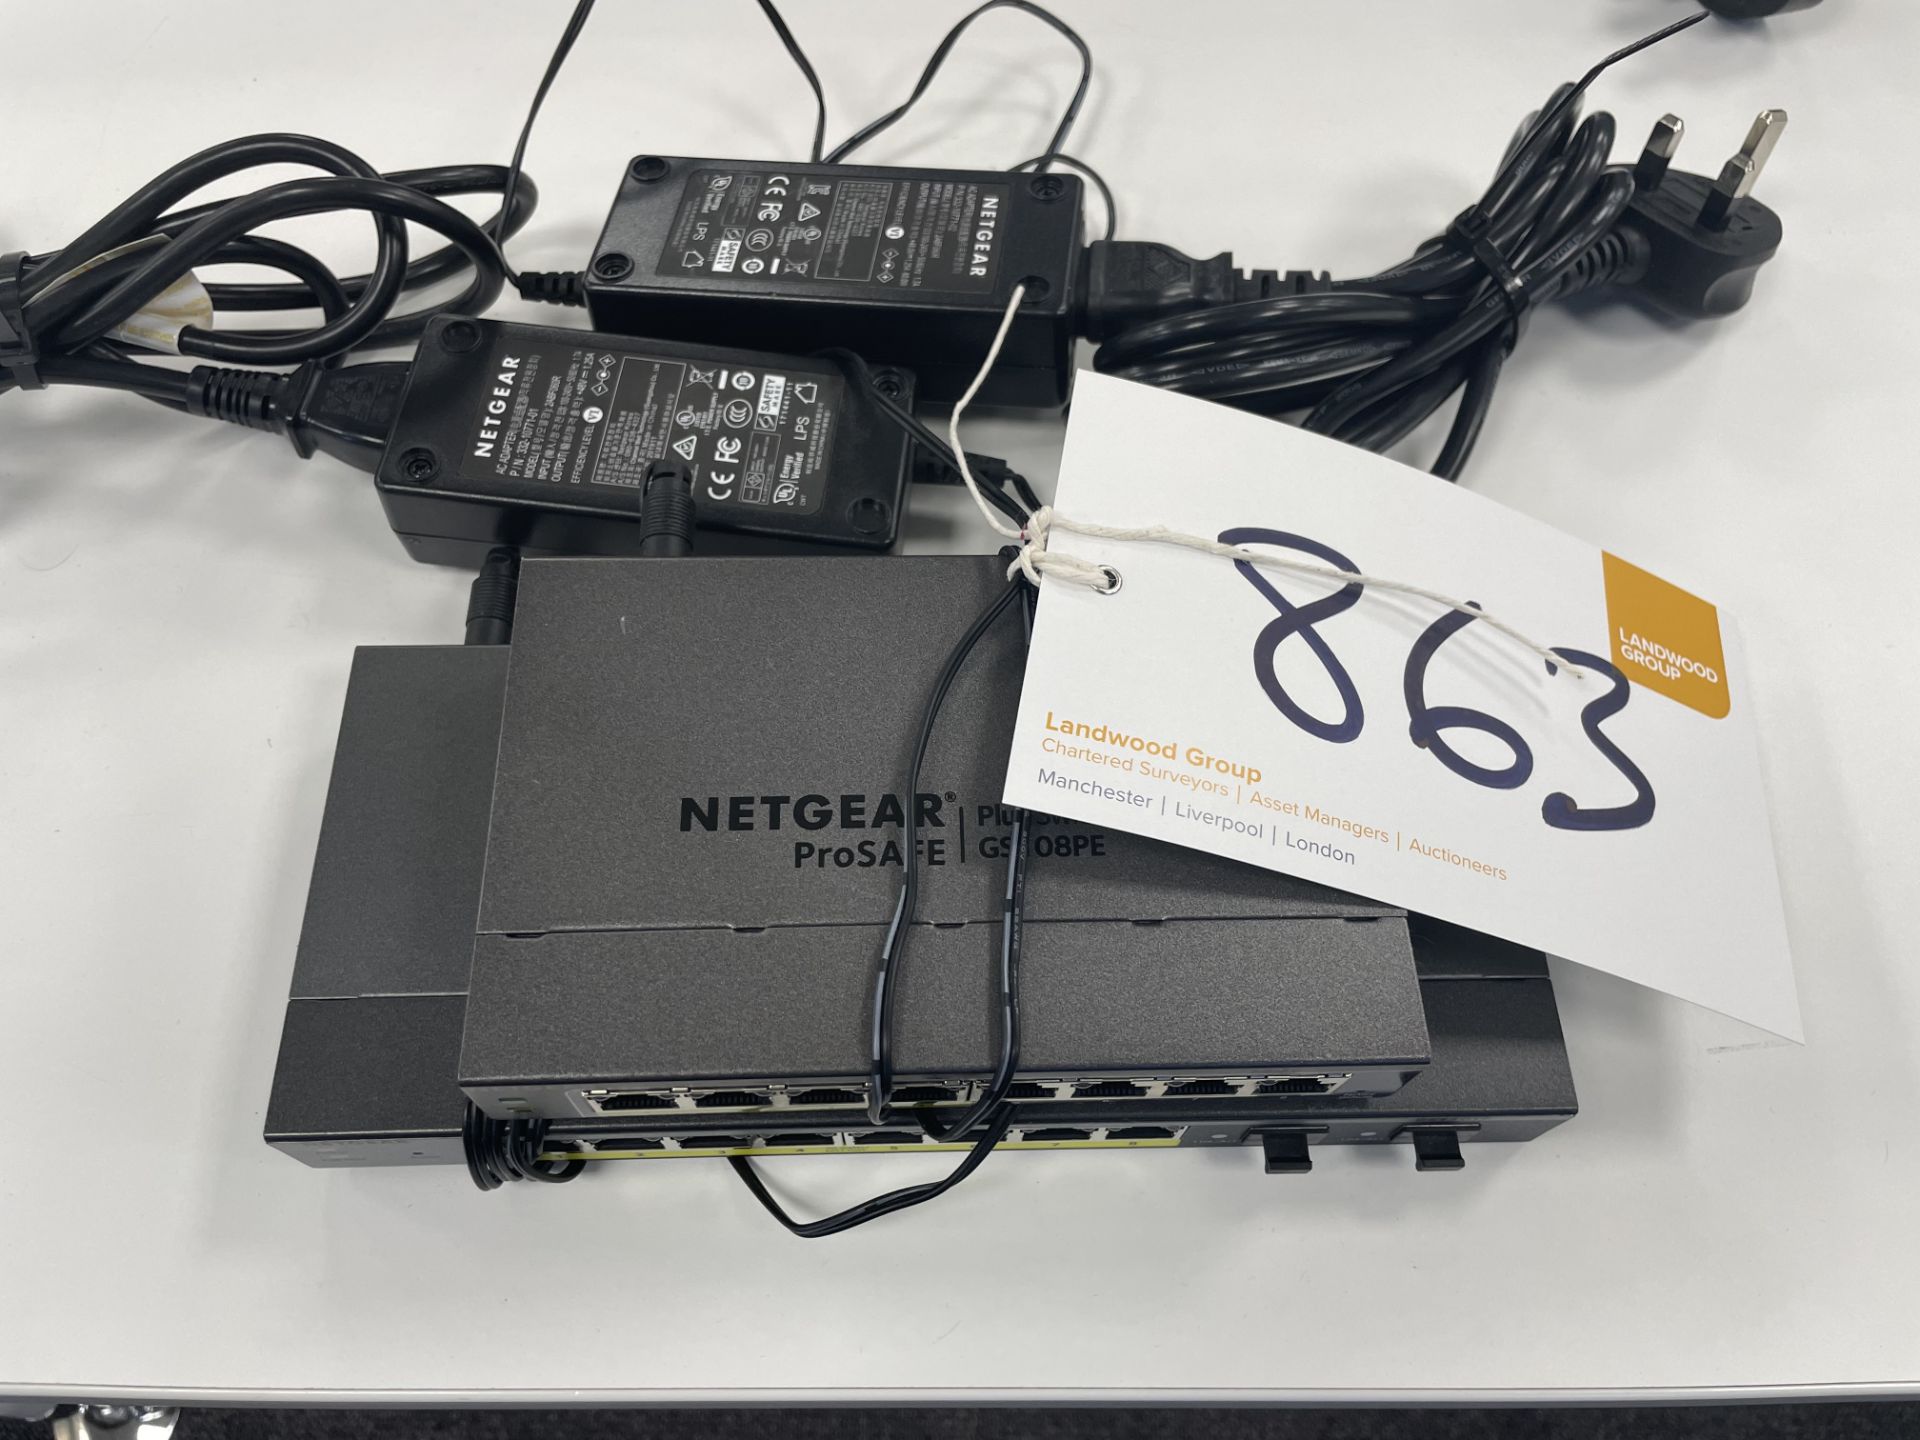 A Netgear GS110TPv3 8 port gigabit POE+ ethernet smart managed pro switch with Netgear prosafe